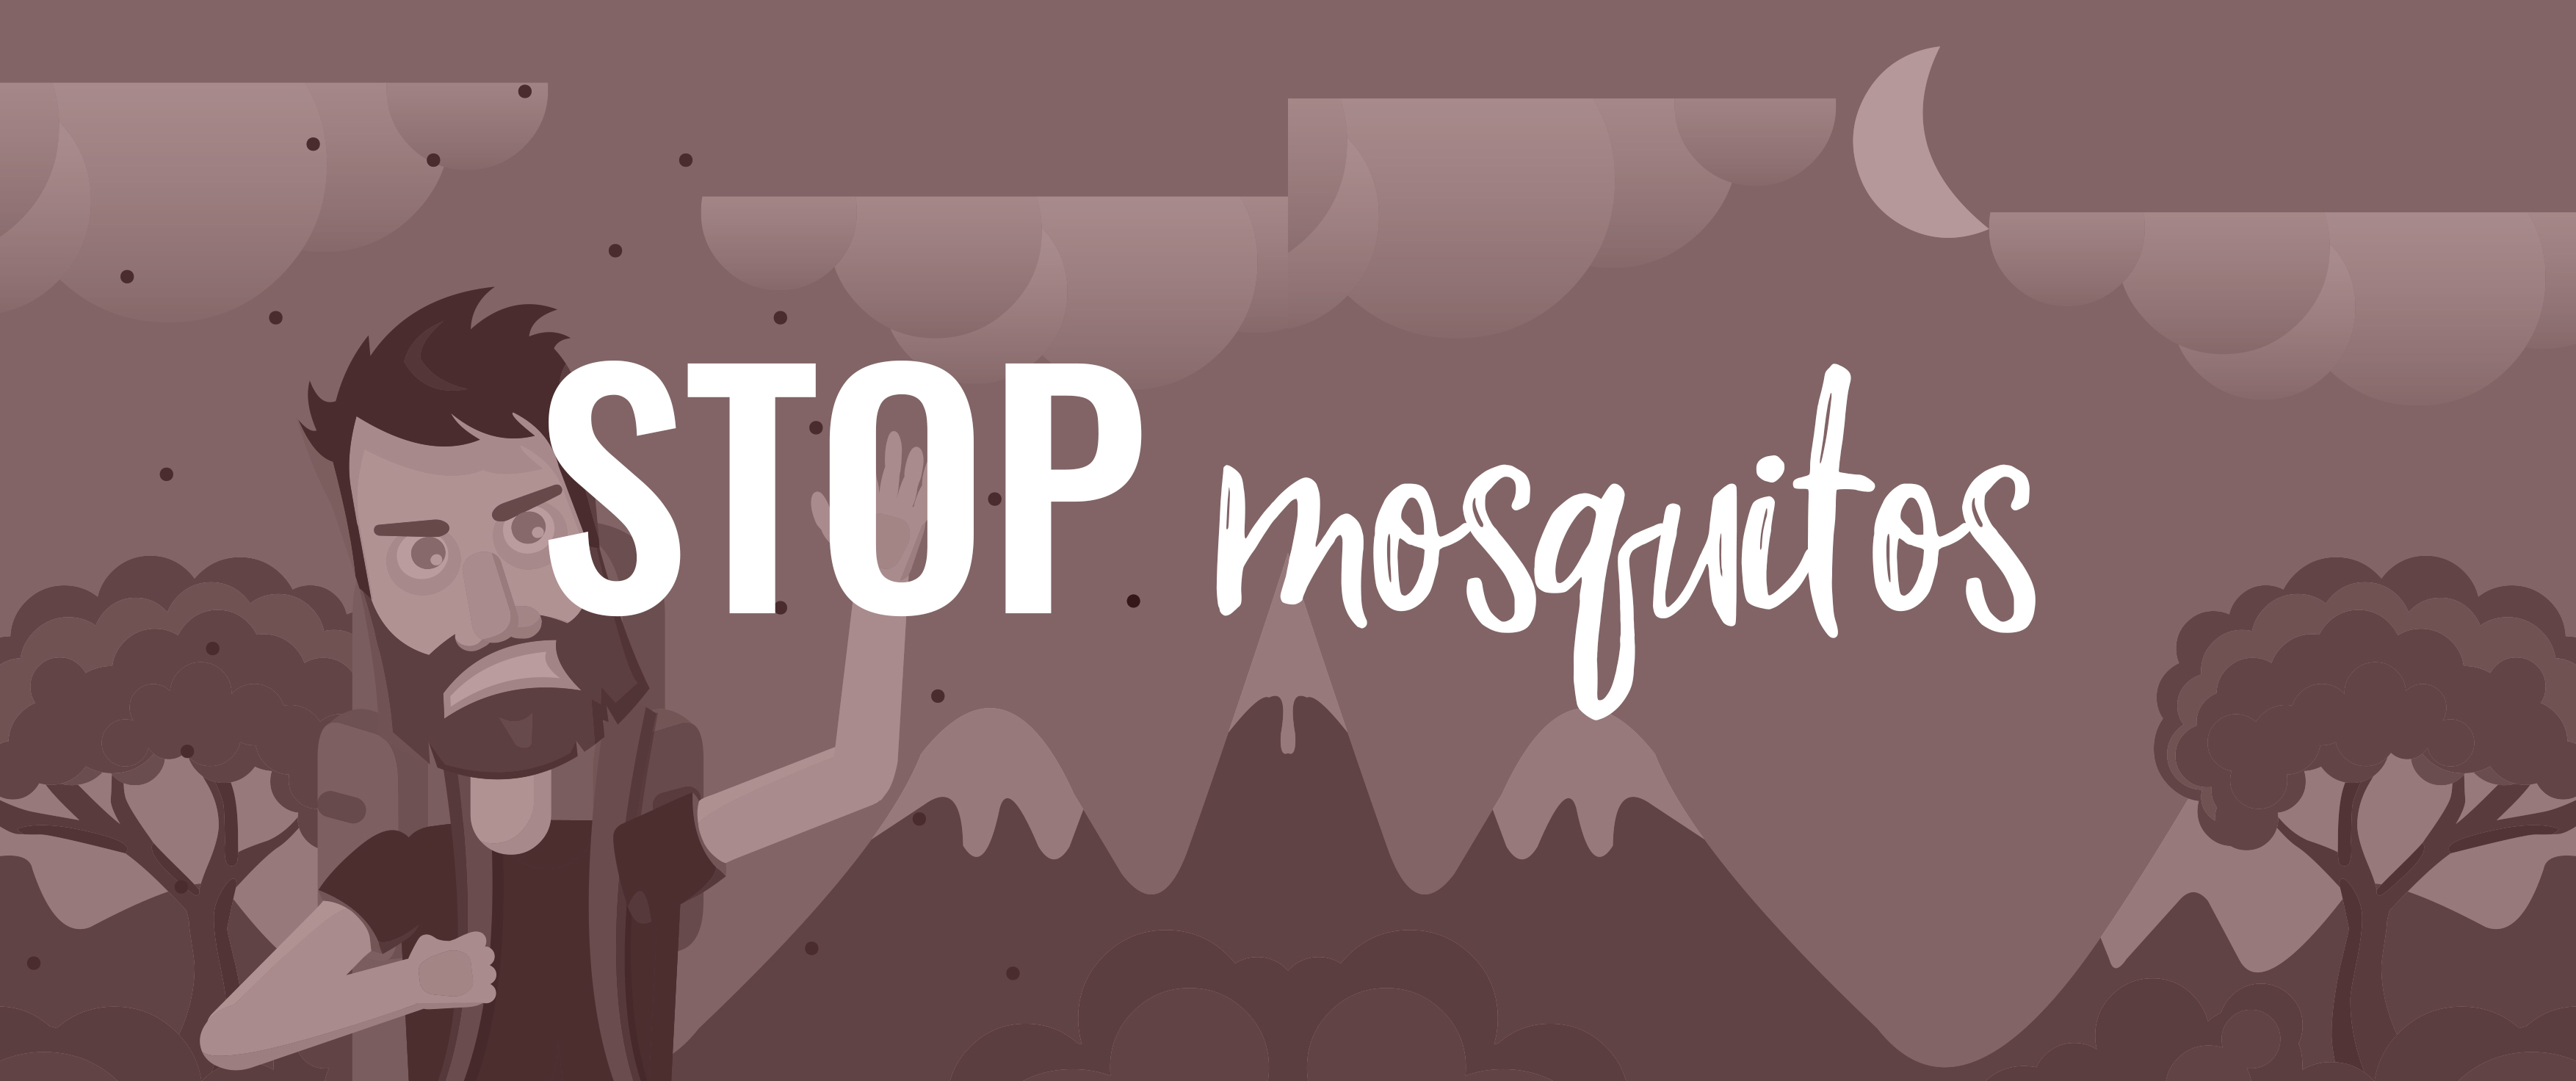 consejos-picadas-mosquito